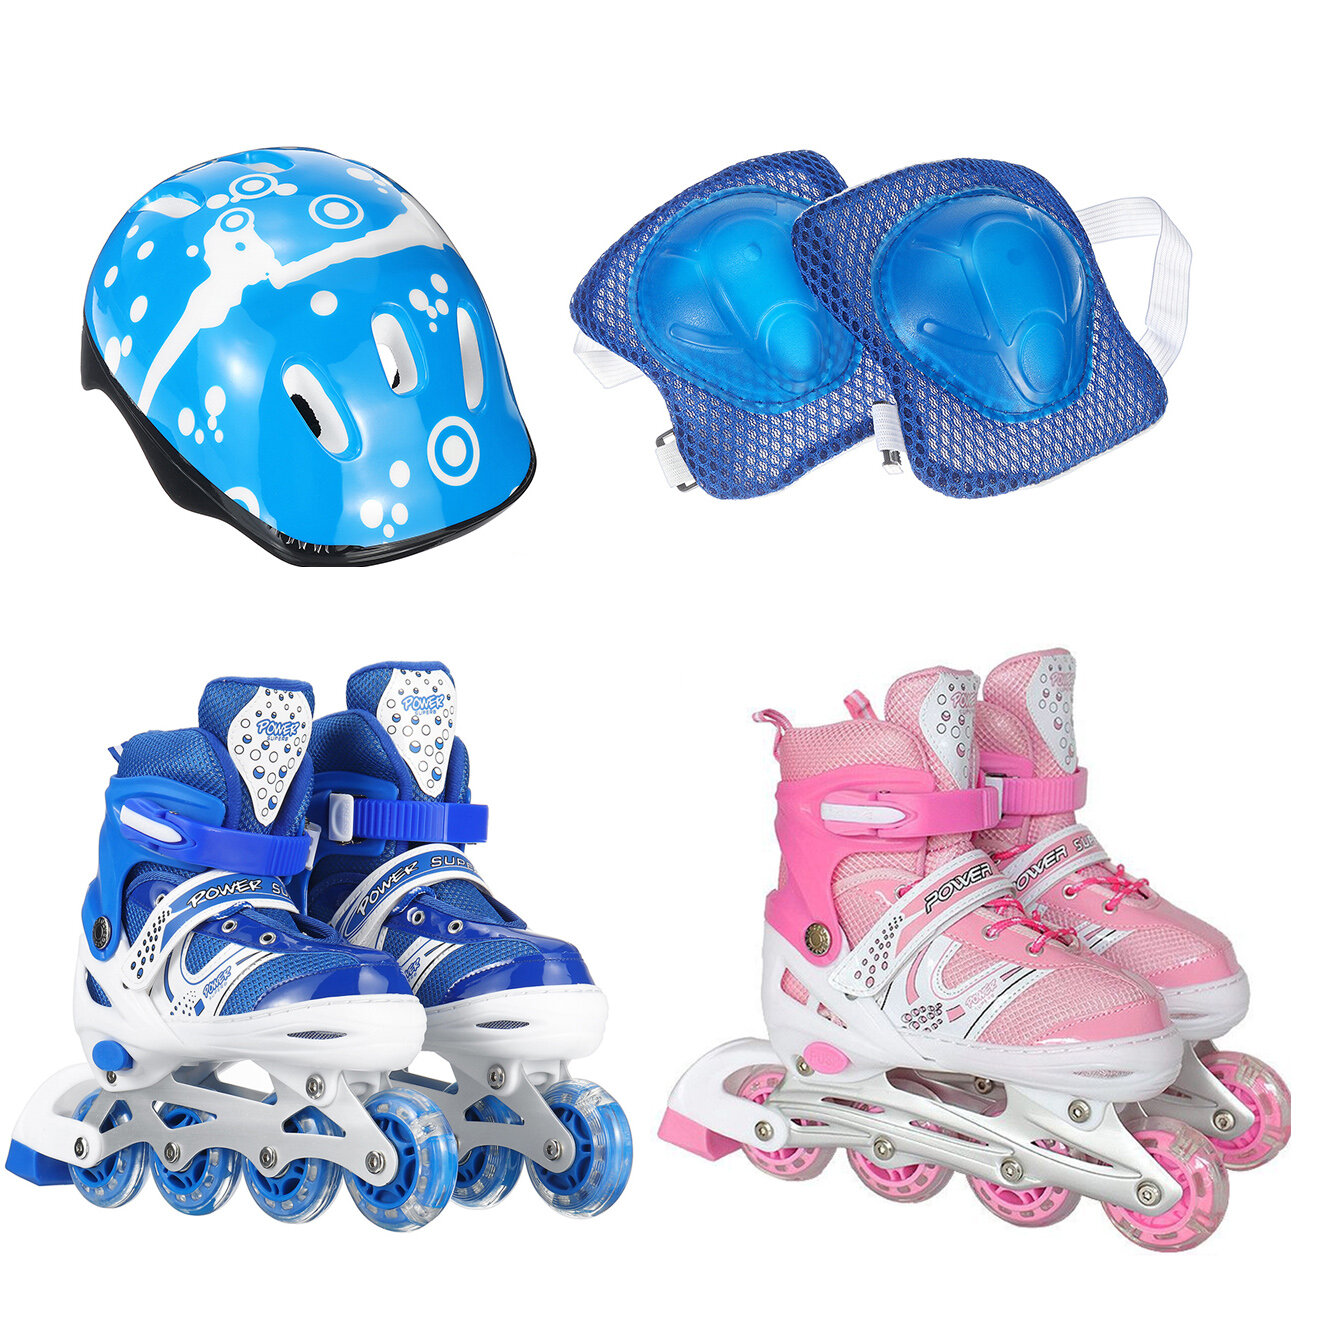 Image of Children's Adjustable Skates Full Set Single Flash Ice Skate Shoes for Boys and Girls Inline Skates for Beginners